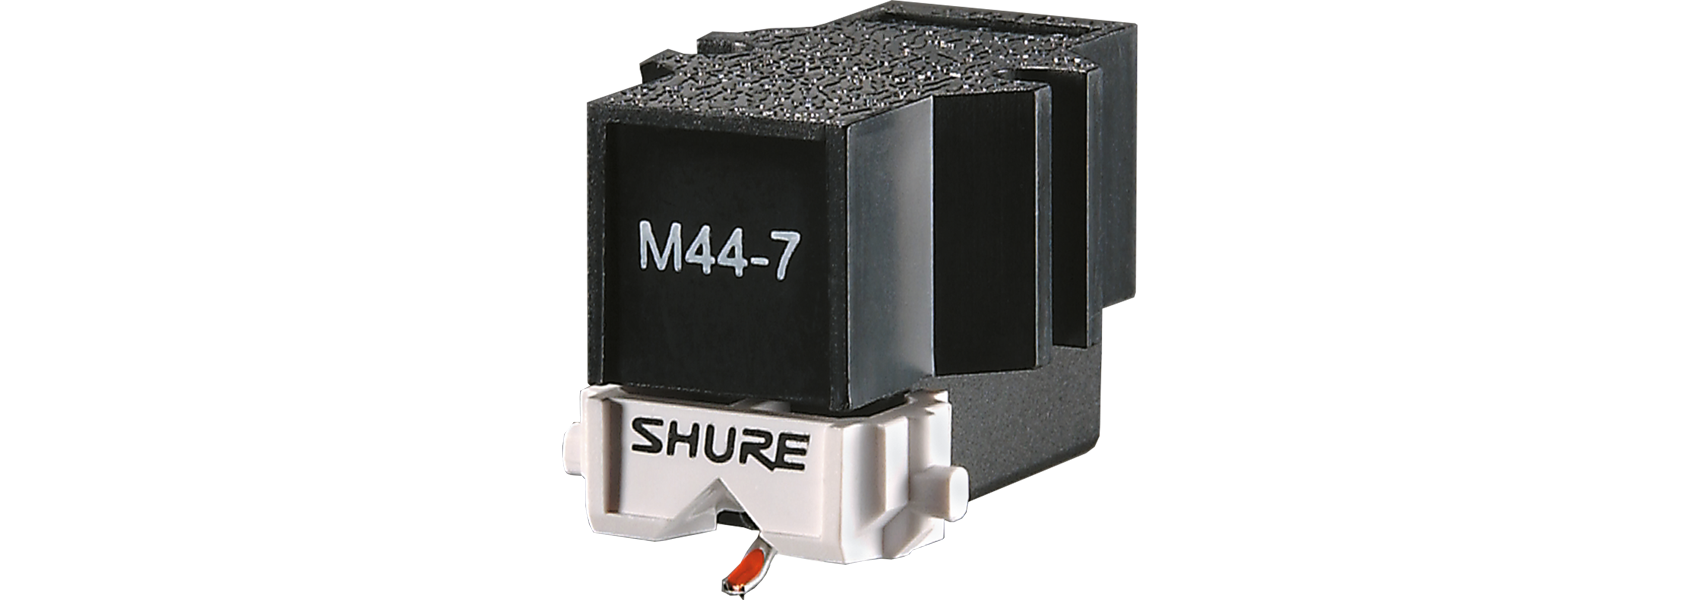 SHURE / M44-7対応】N44-7に代わるオススメ交換針のご紹介！【2020/10 